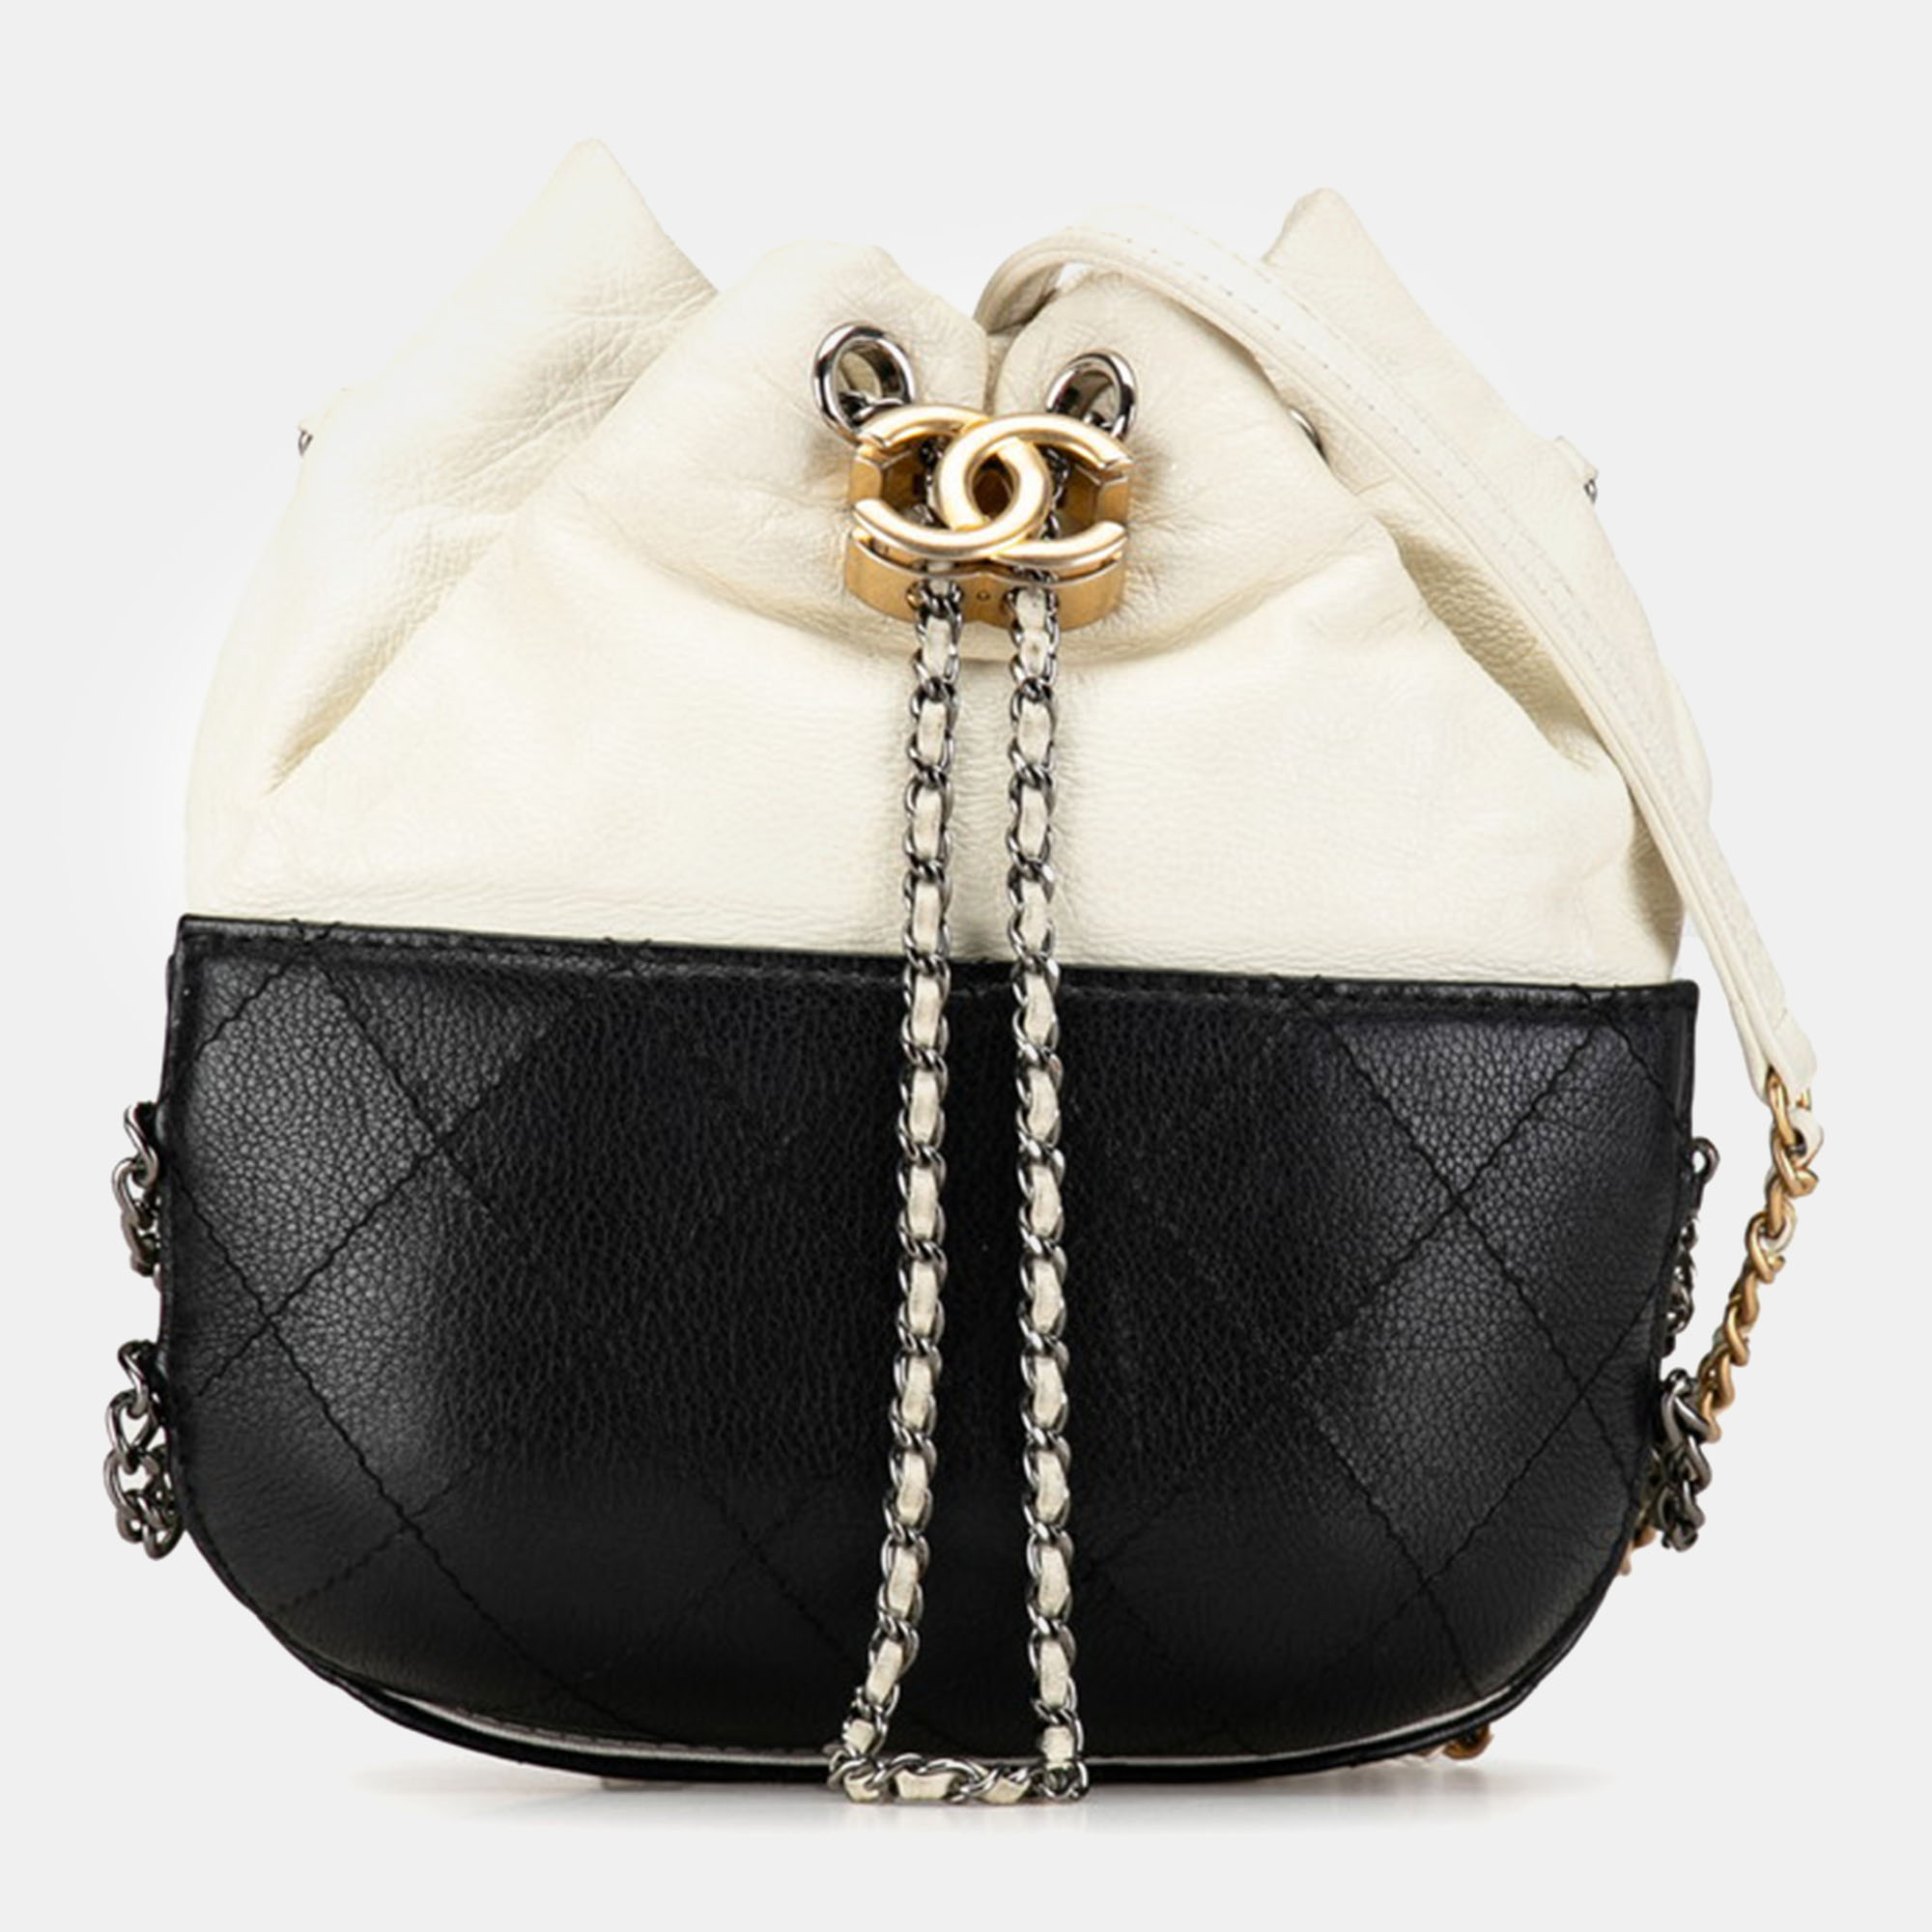 Chanel black/white leather drawstring gabrielle shoulder bags